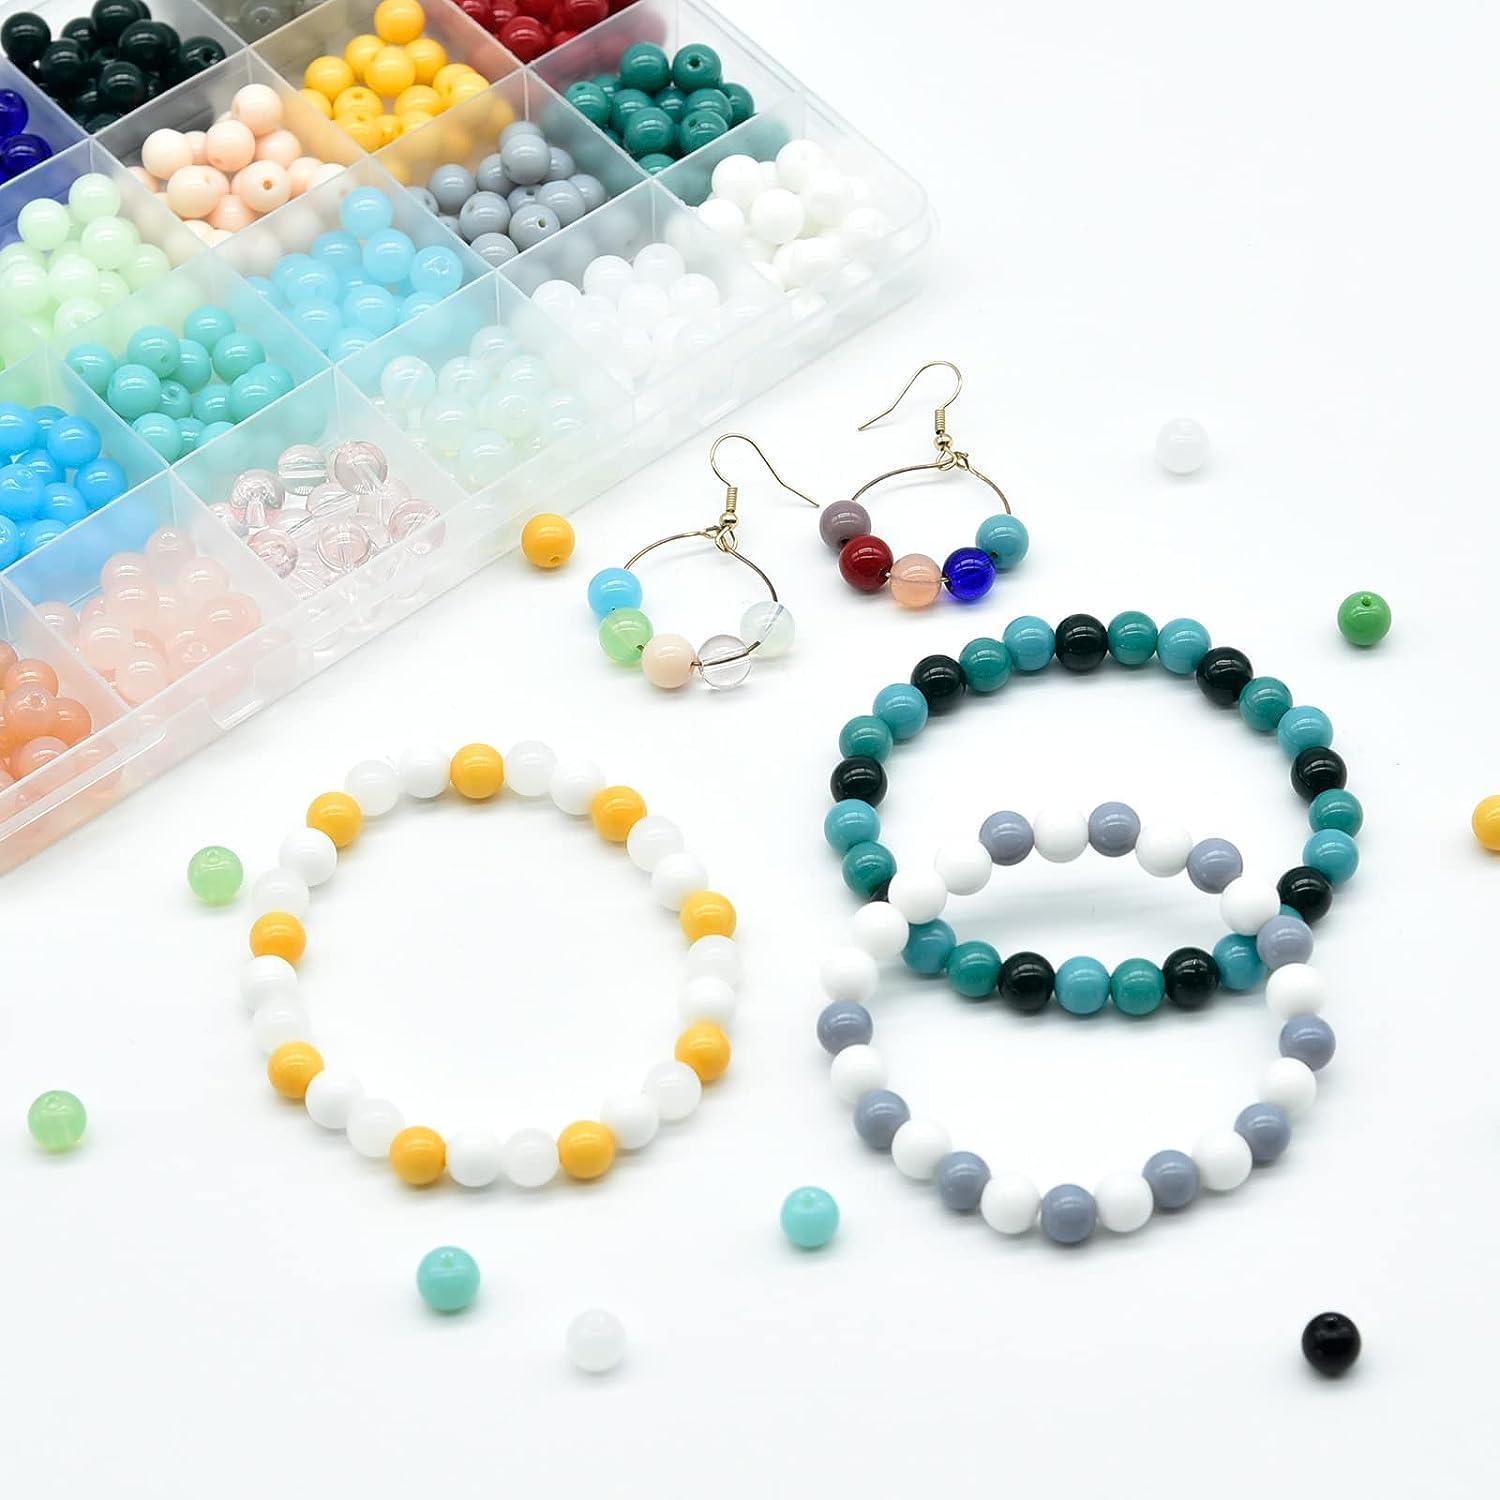 ZHFMLY 1180PCS Glass Beads 6mm Transparent Crystal Smooth Loose Beads  Bracelet Making Kit Healing Chakra Beads for DIY Jewelry Making Bracelets 